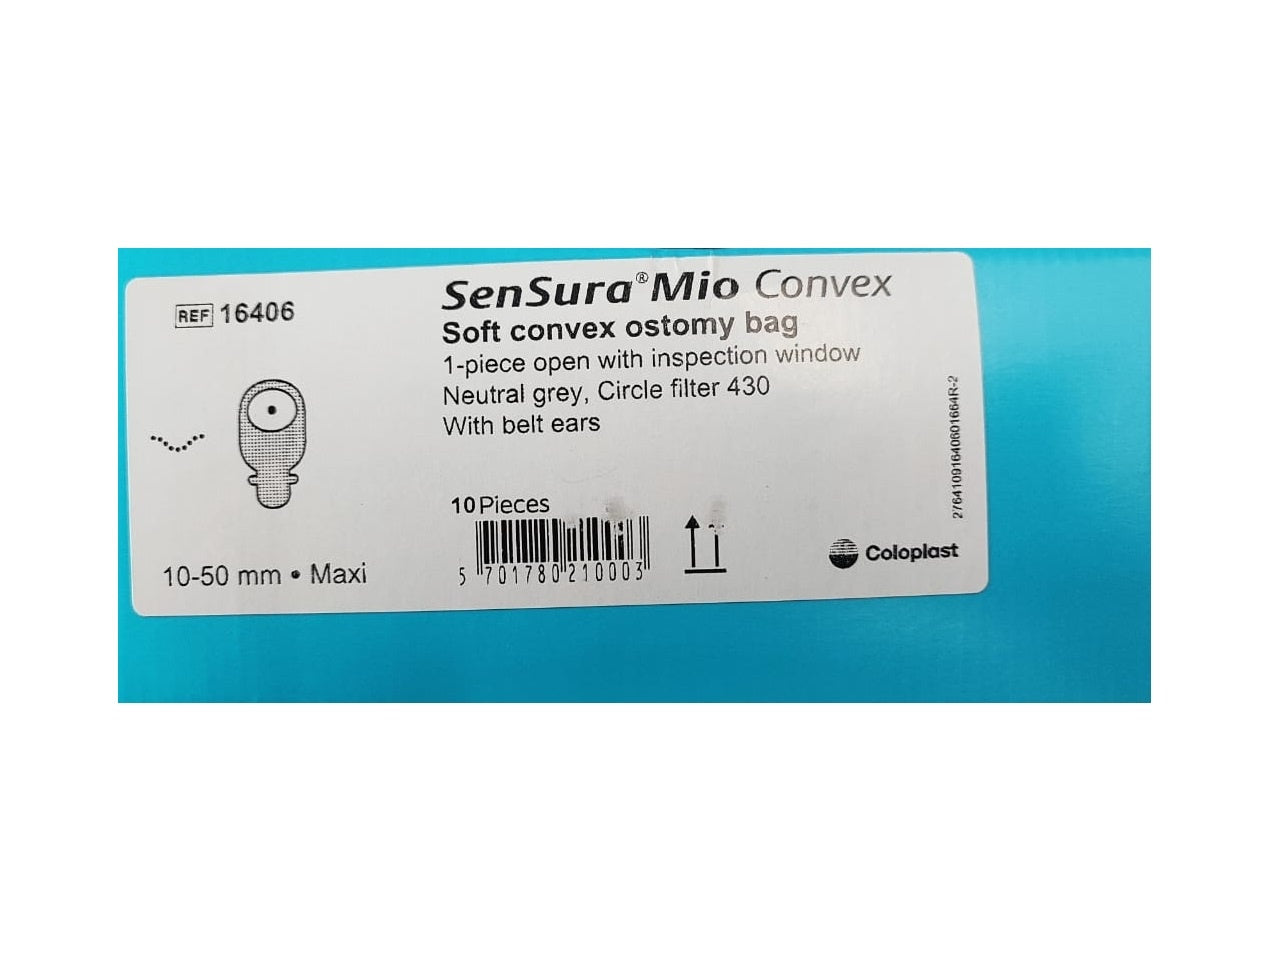 Coloplast Sensura Mio Soft Convex 1-Piece Open with Inspection window Neutral Grey Ostomy Bag 10-50mm 16406